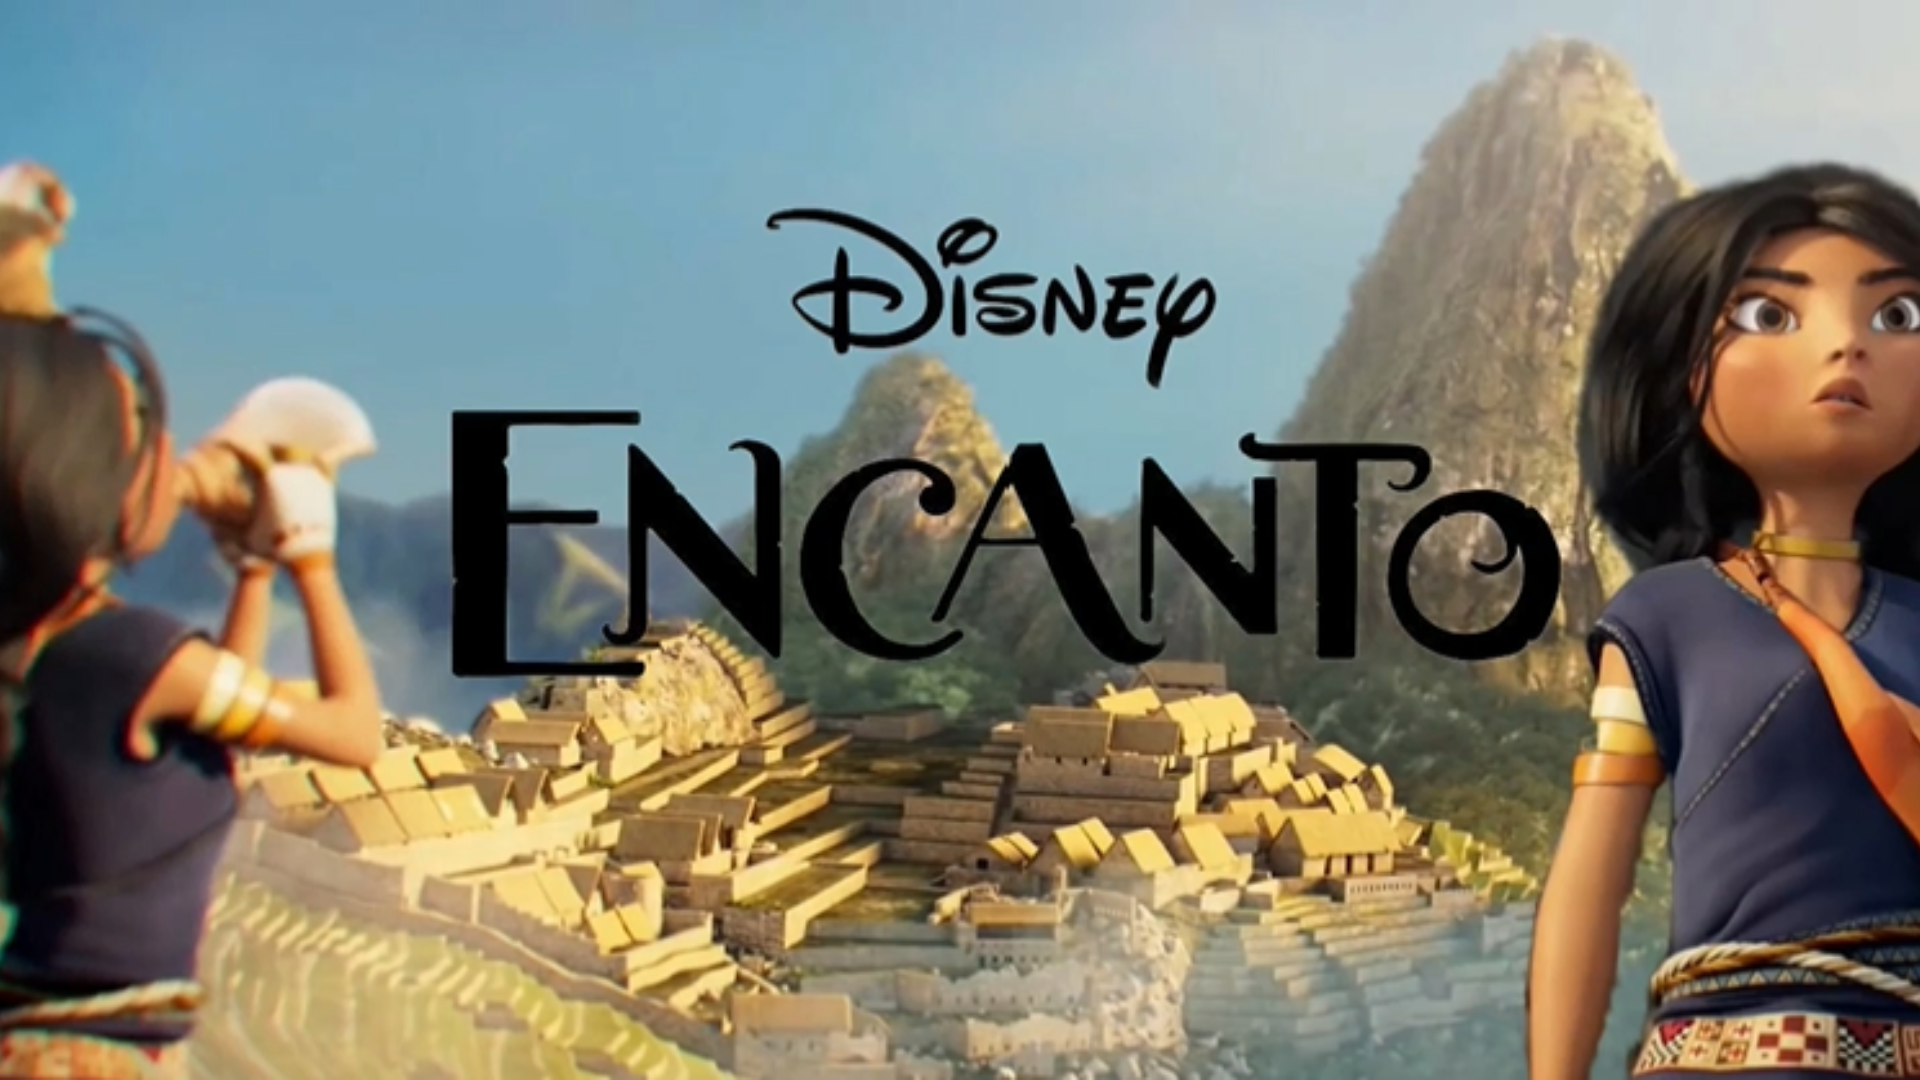 Encanto Wallpaper - Best Encanto Movie Background, Image & Photo